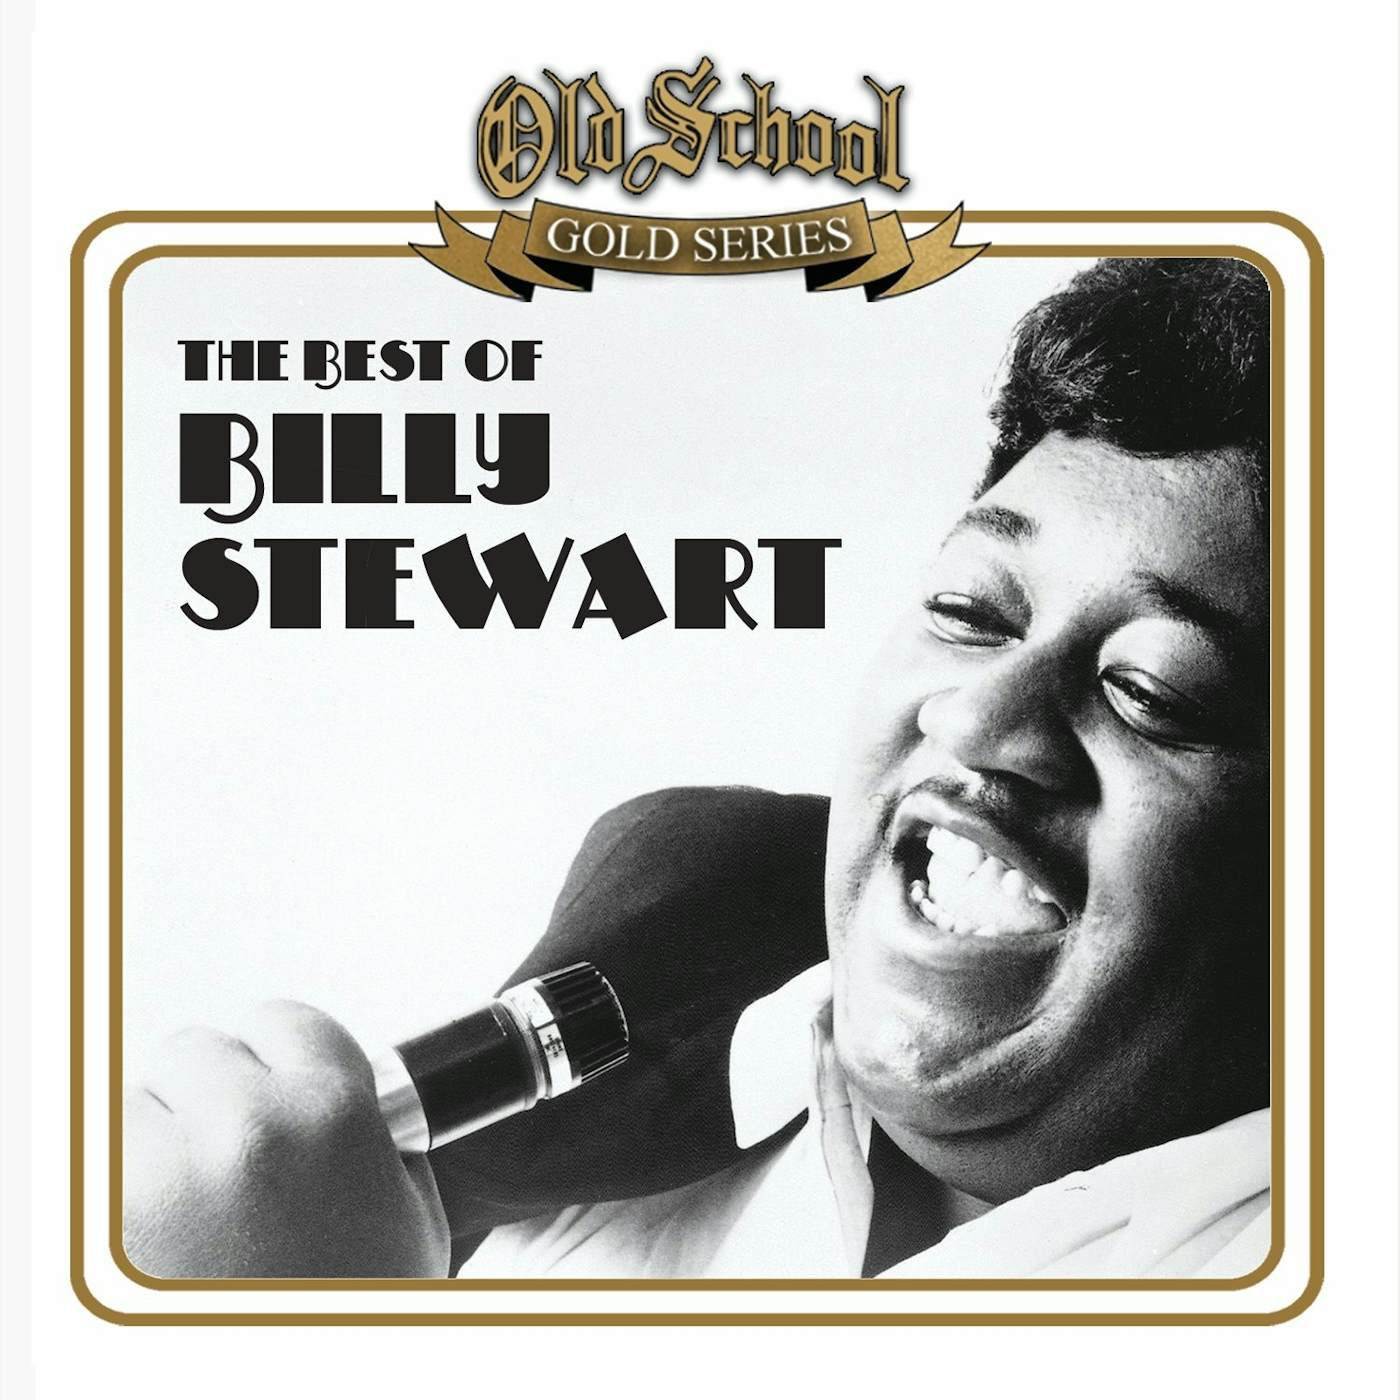 Billy Stewart OLD SCHOOL GOLD SERIES CD